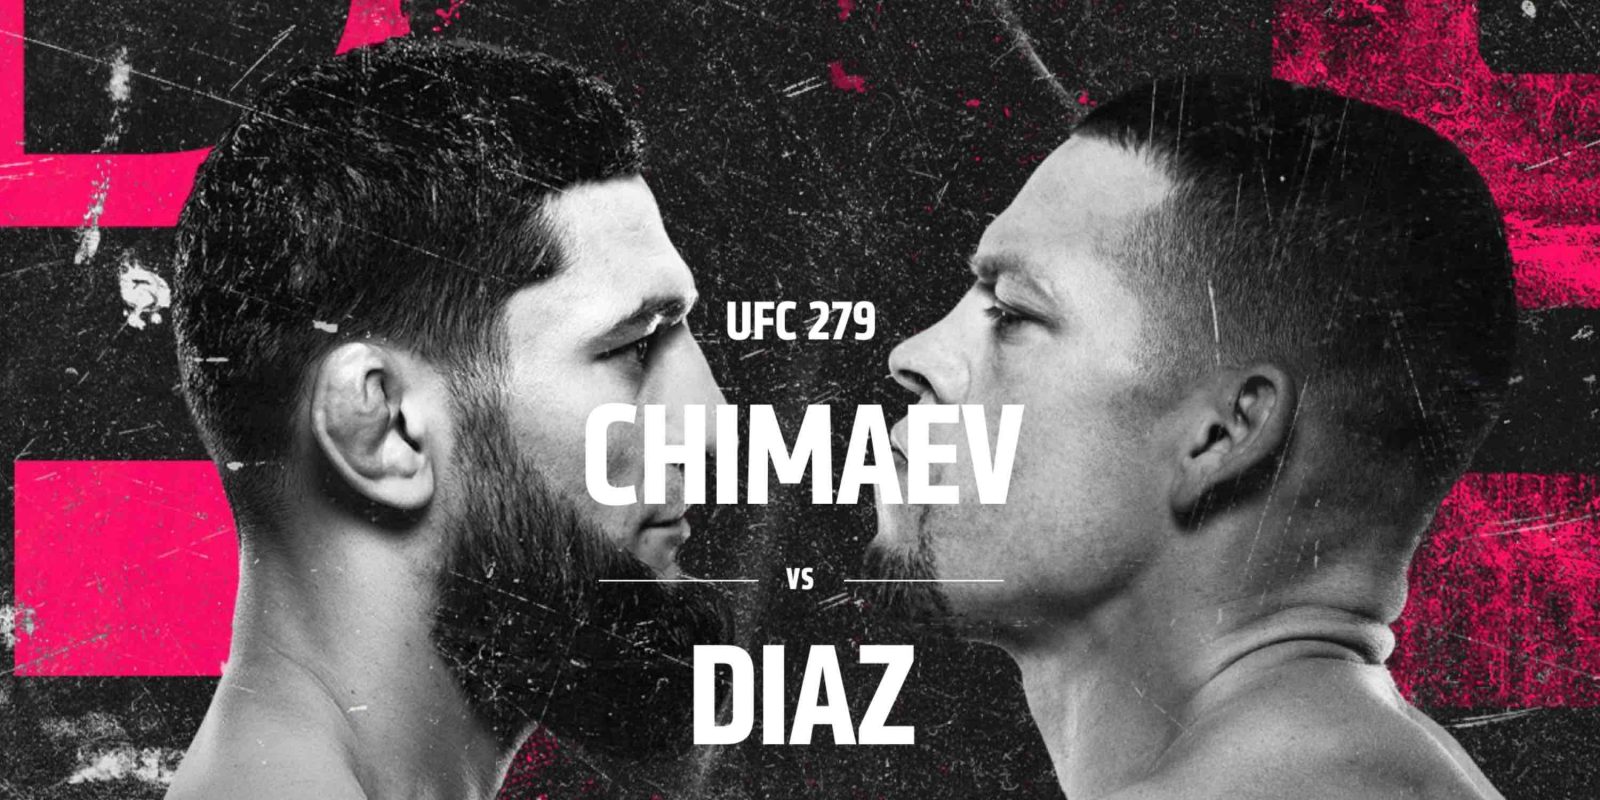 watch UFC 279 Chimaev vs Diaz